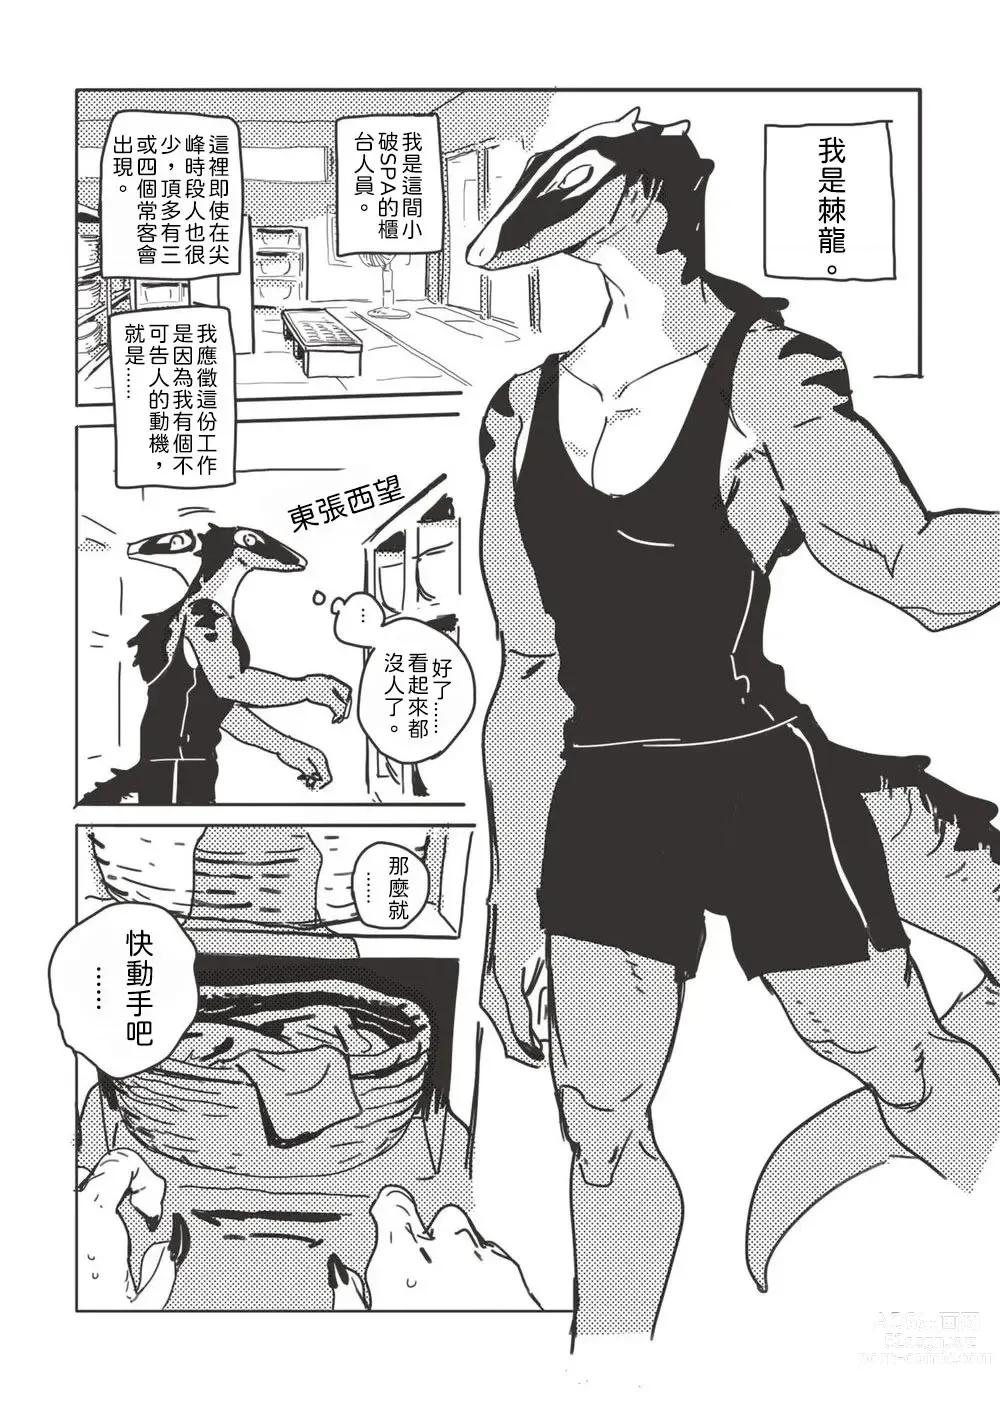 Page 2 of doujinshi Hot spring Zaurus 溫泉恐龍